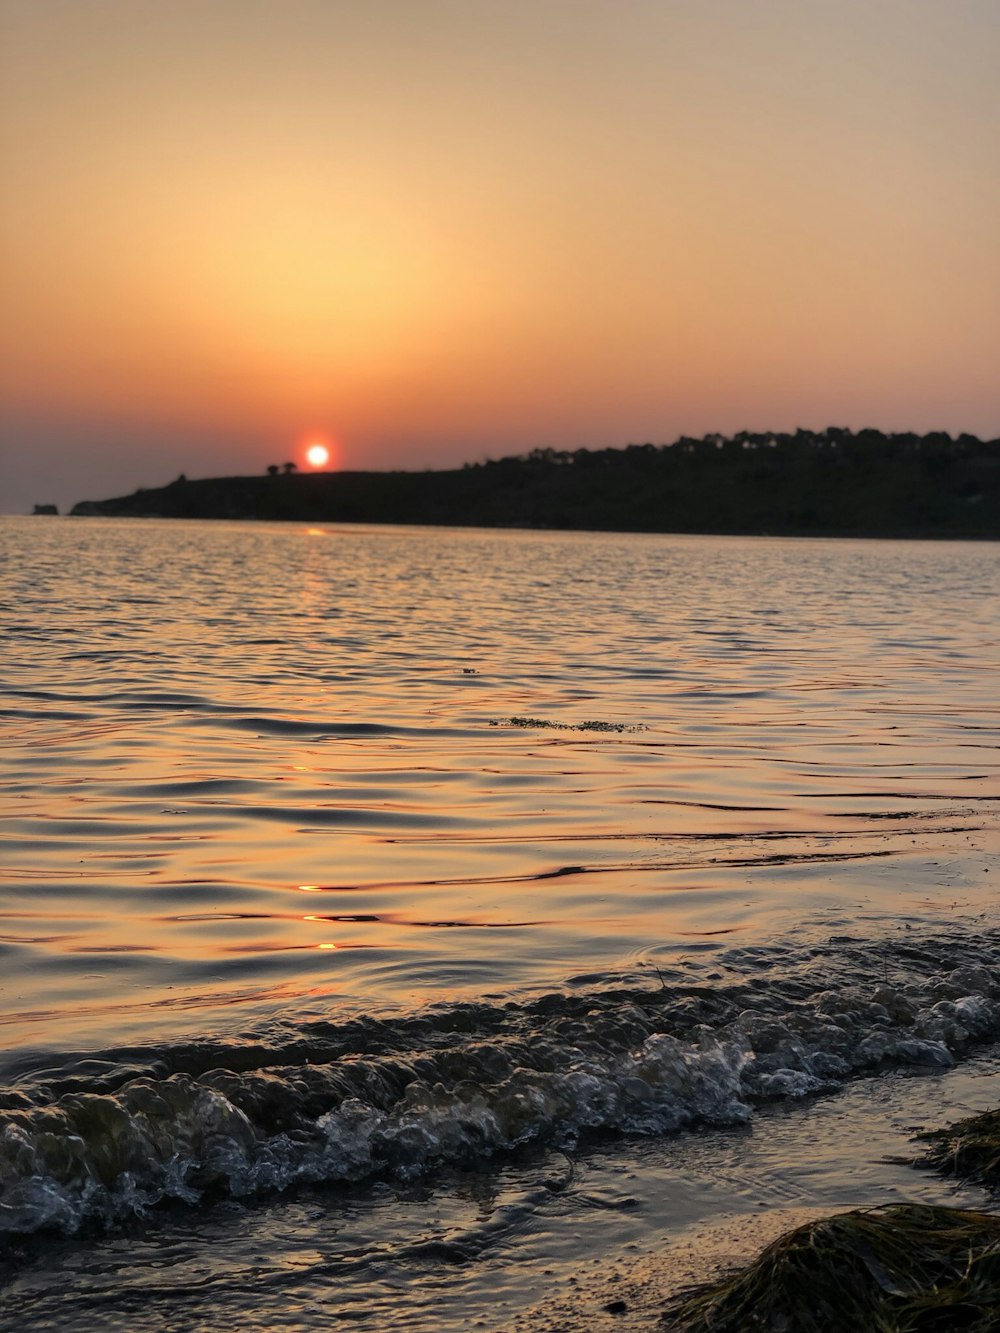 body of water near island at sunset